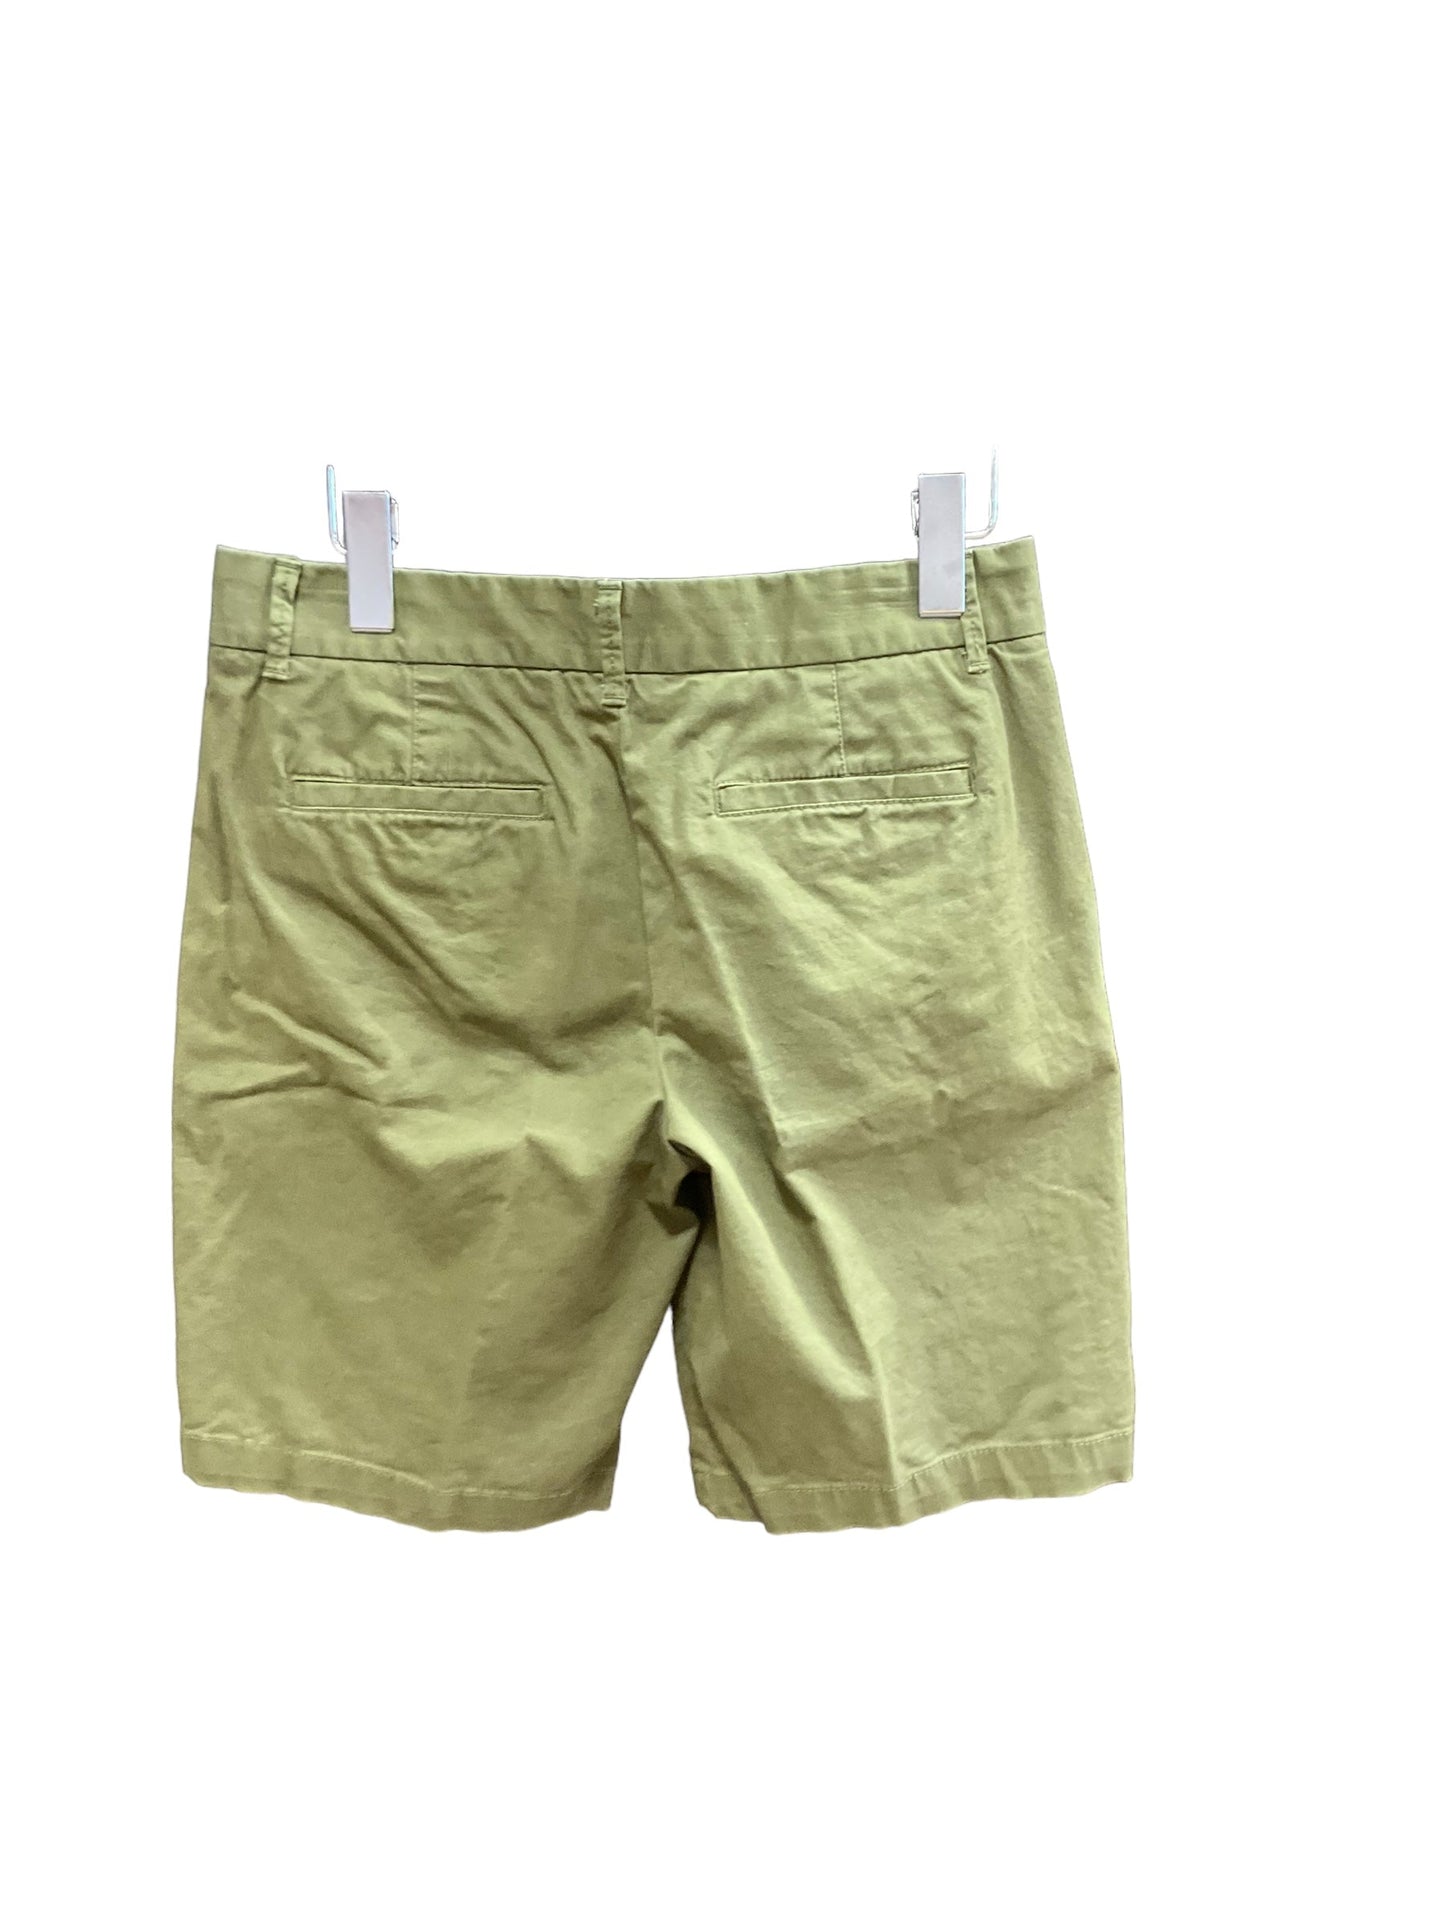 Green Shorts Stylus, Size 2